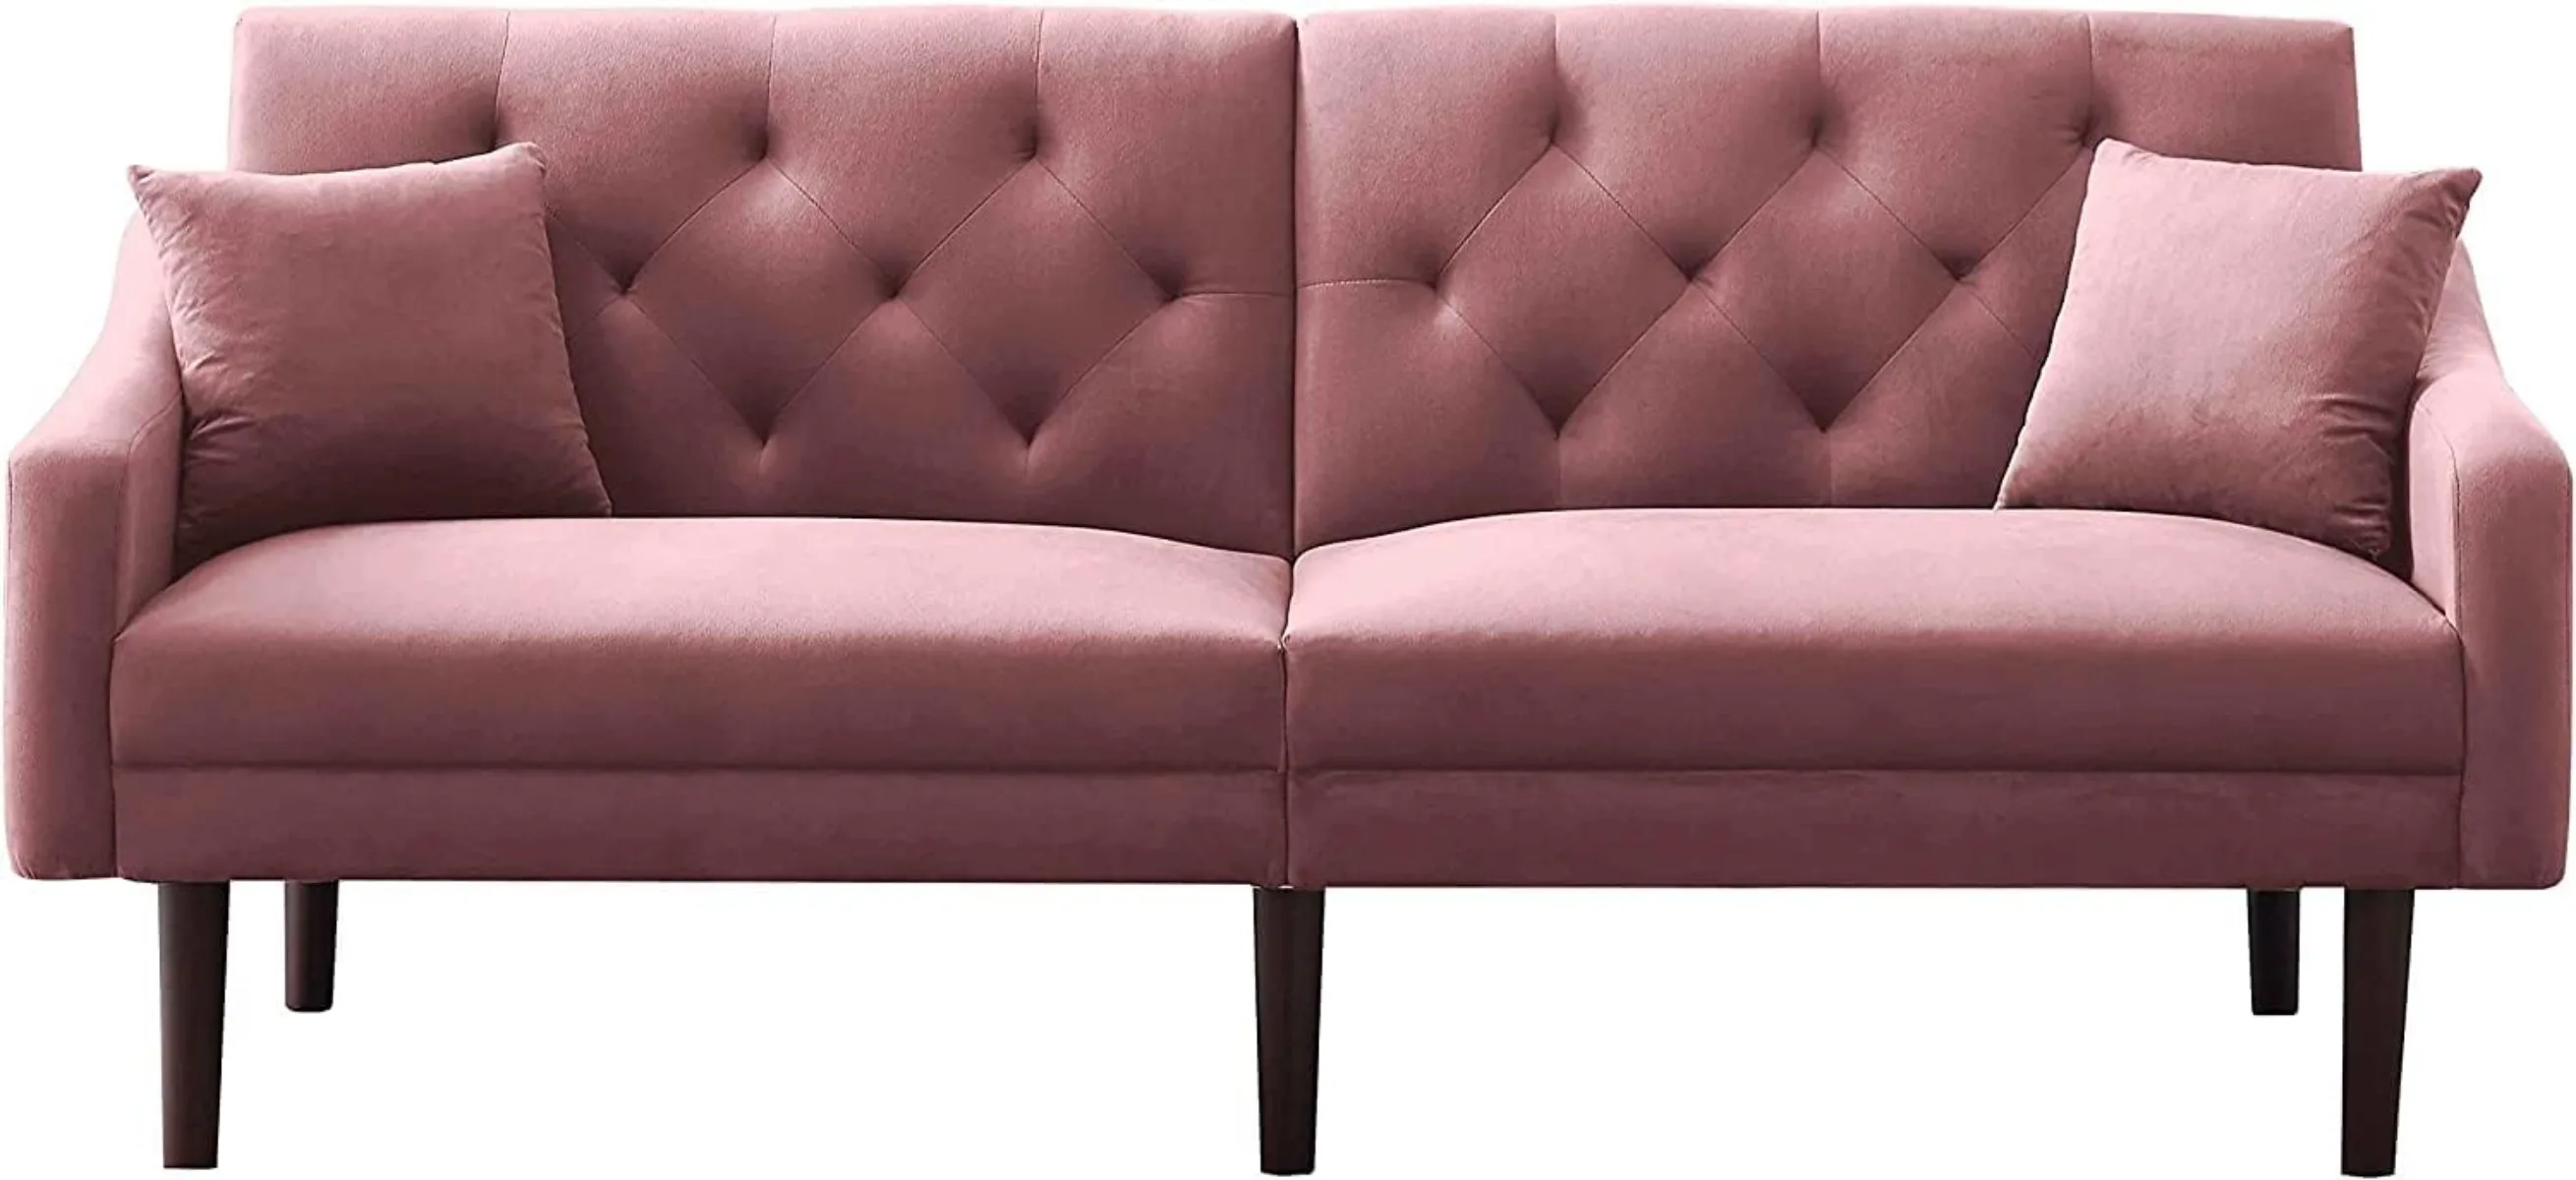 Convertible Sleeper Futon Sofa with 2 Pillows Pink 4